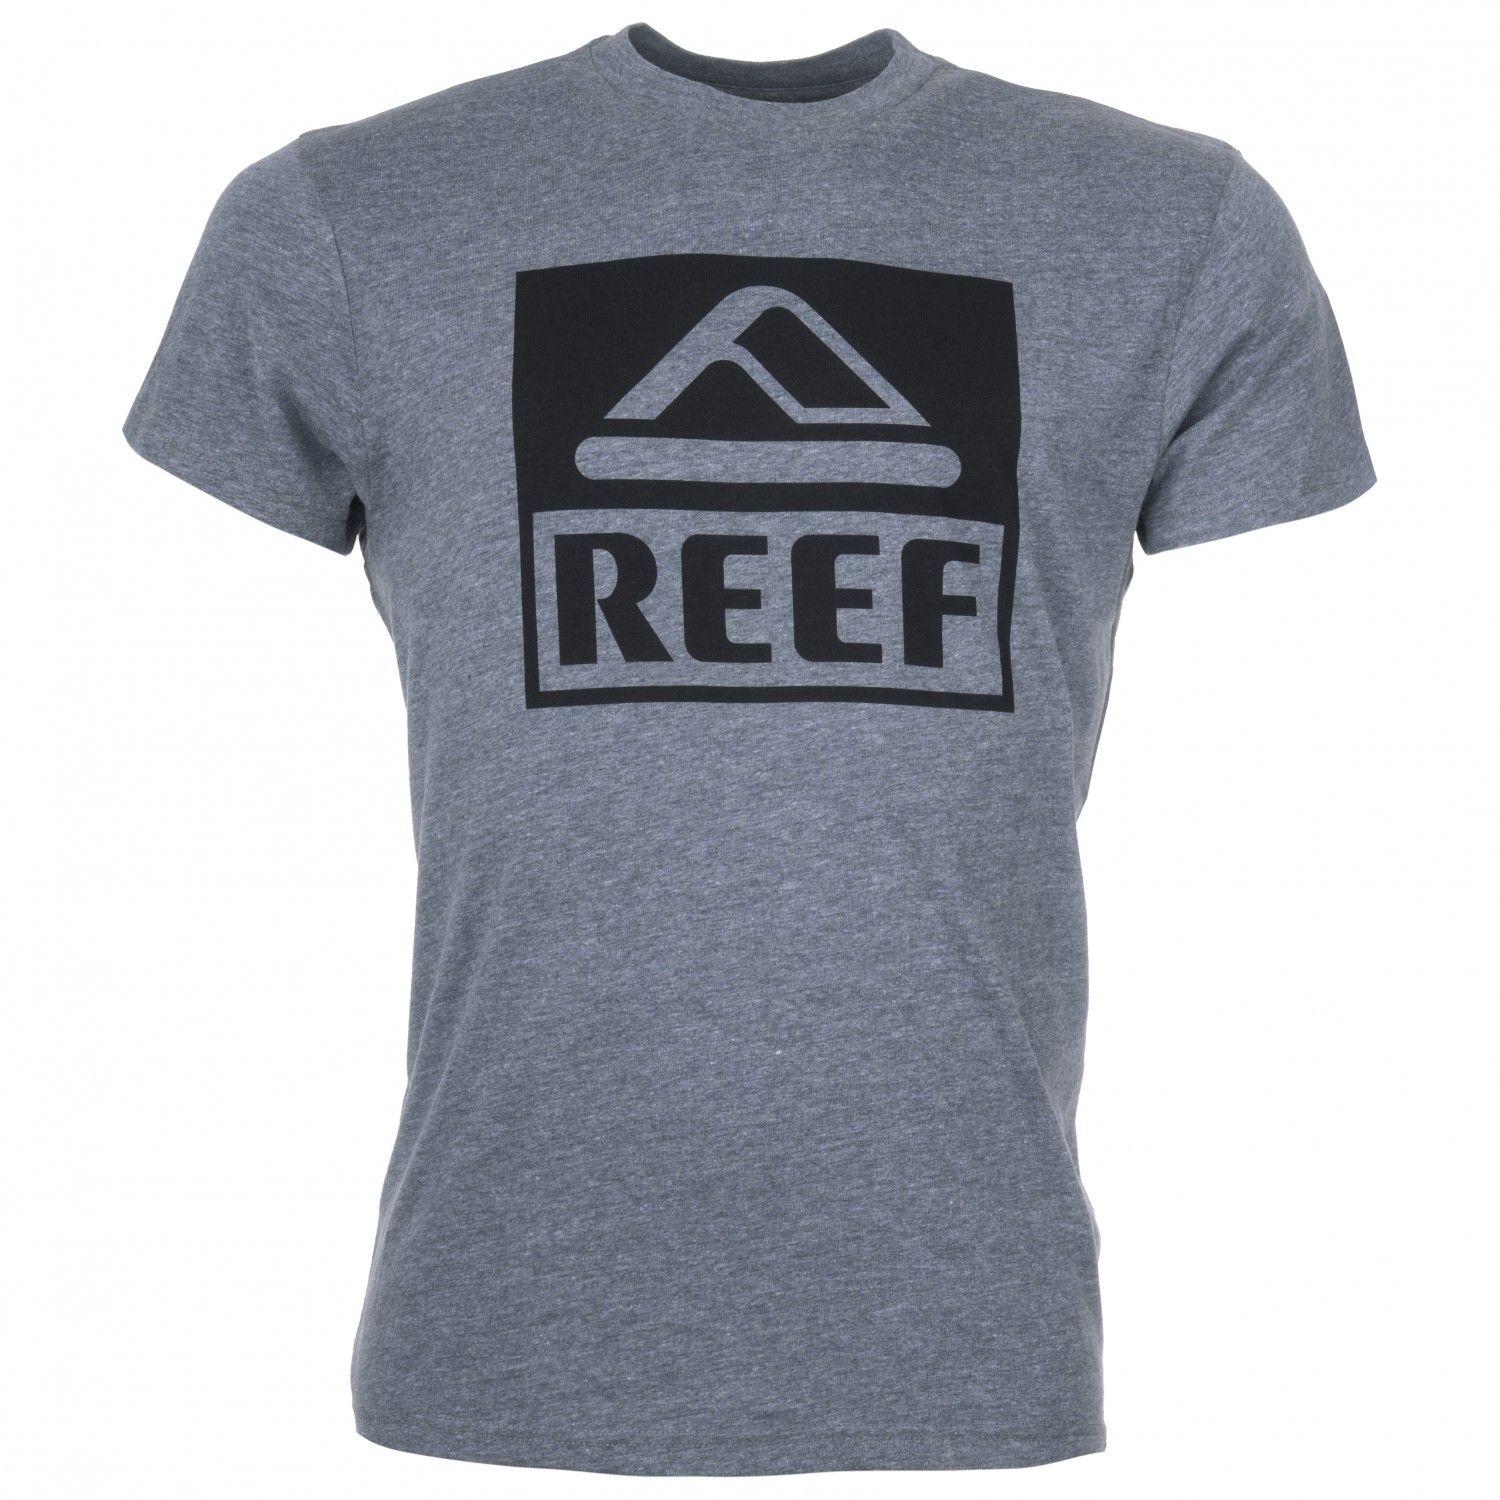 Reef Logo - Reef Logo Tee Big - T-Shirt Men's | Buy online | Alpinetrek.co.uk